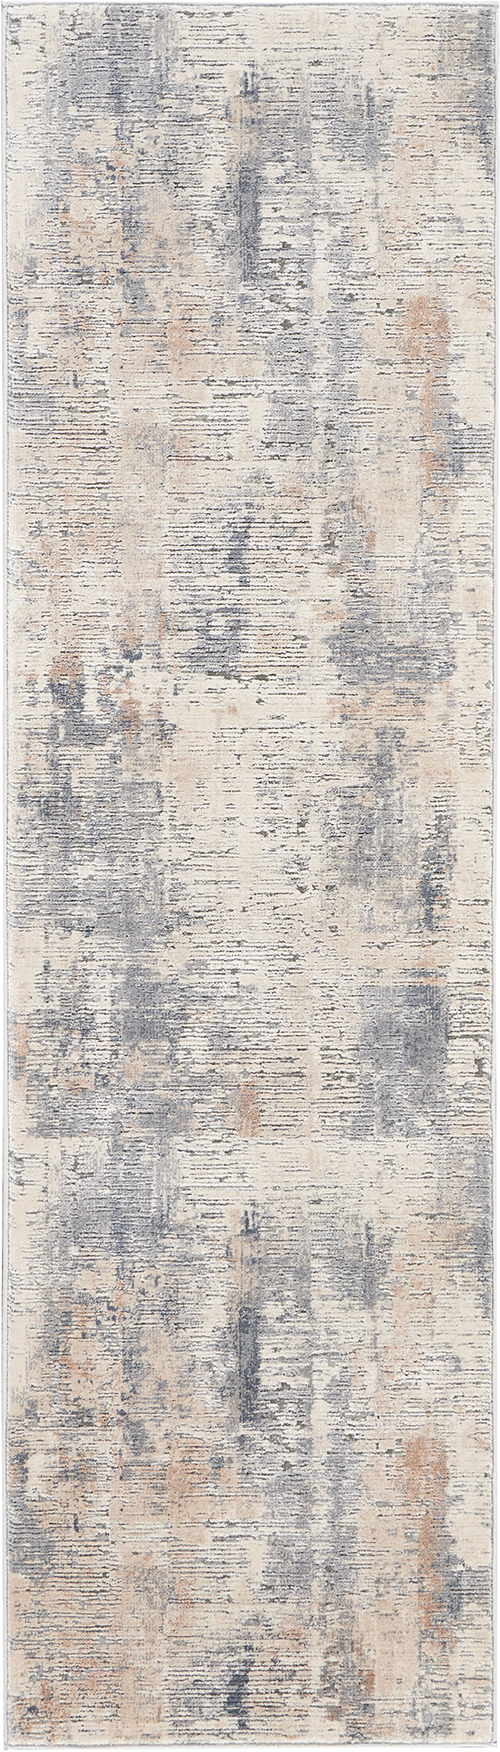 Nourison Rugs - Rustic Textures Runner RUS05 Rug in Beige / Grey - 2.3m x 0.66m